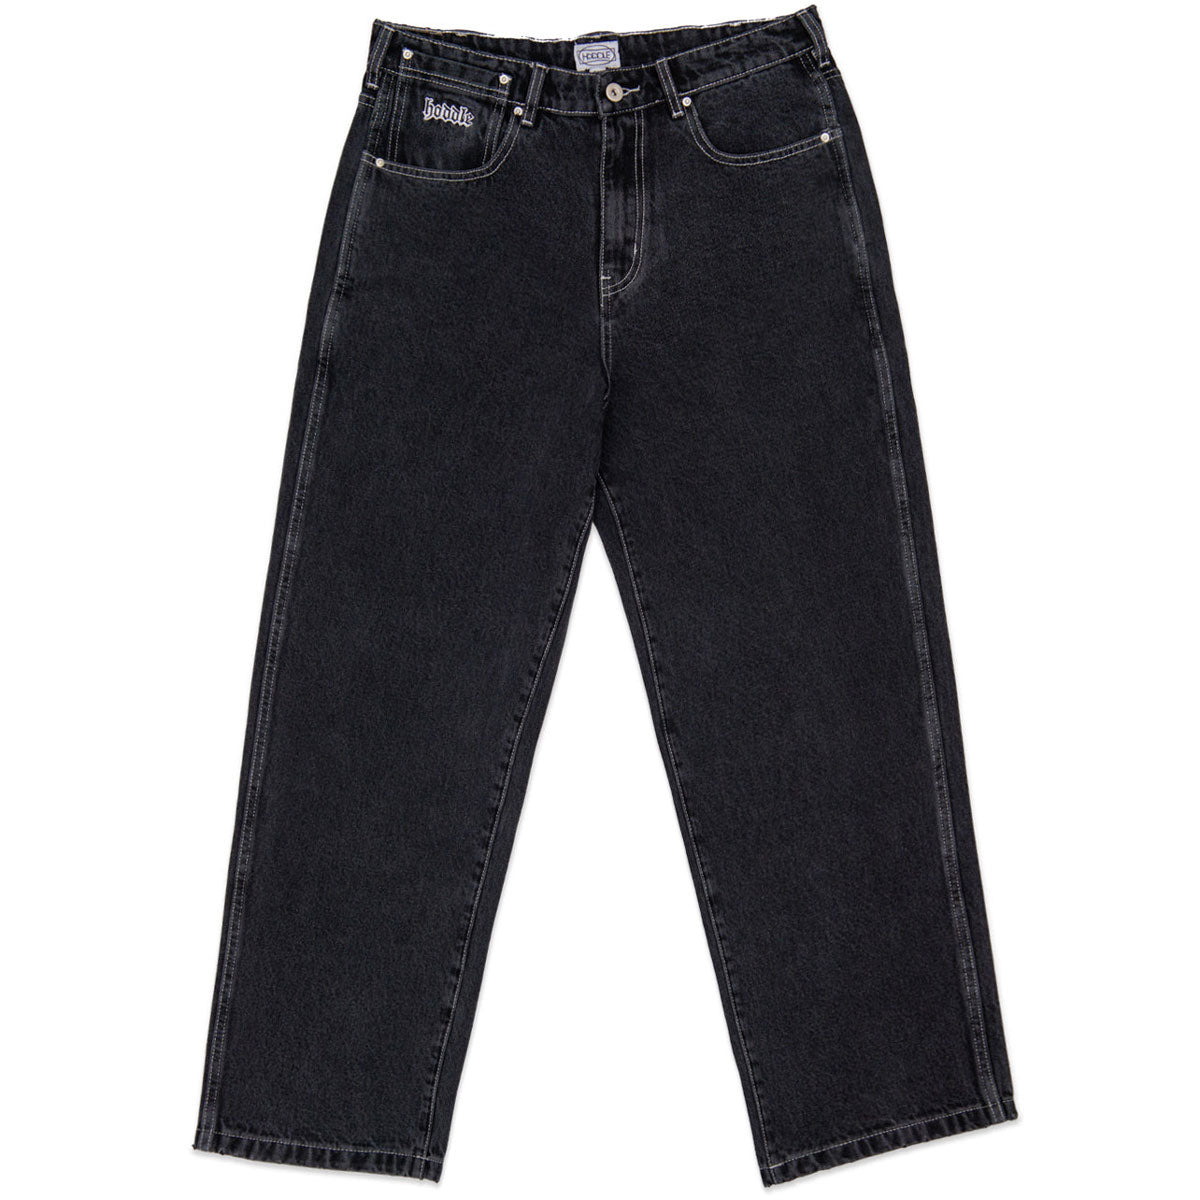 Hoddle 12oz Denim Ranger Jeans - Black Wash image 1